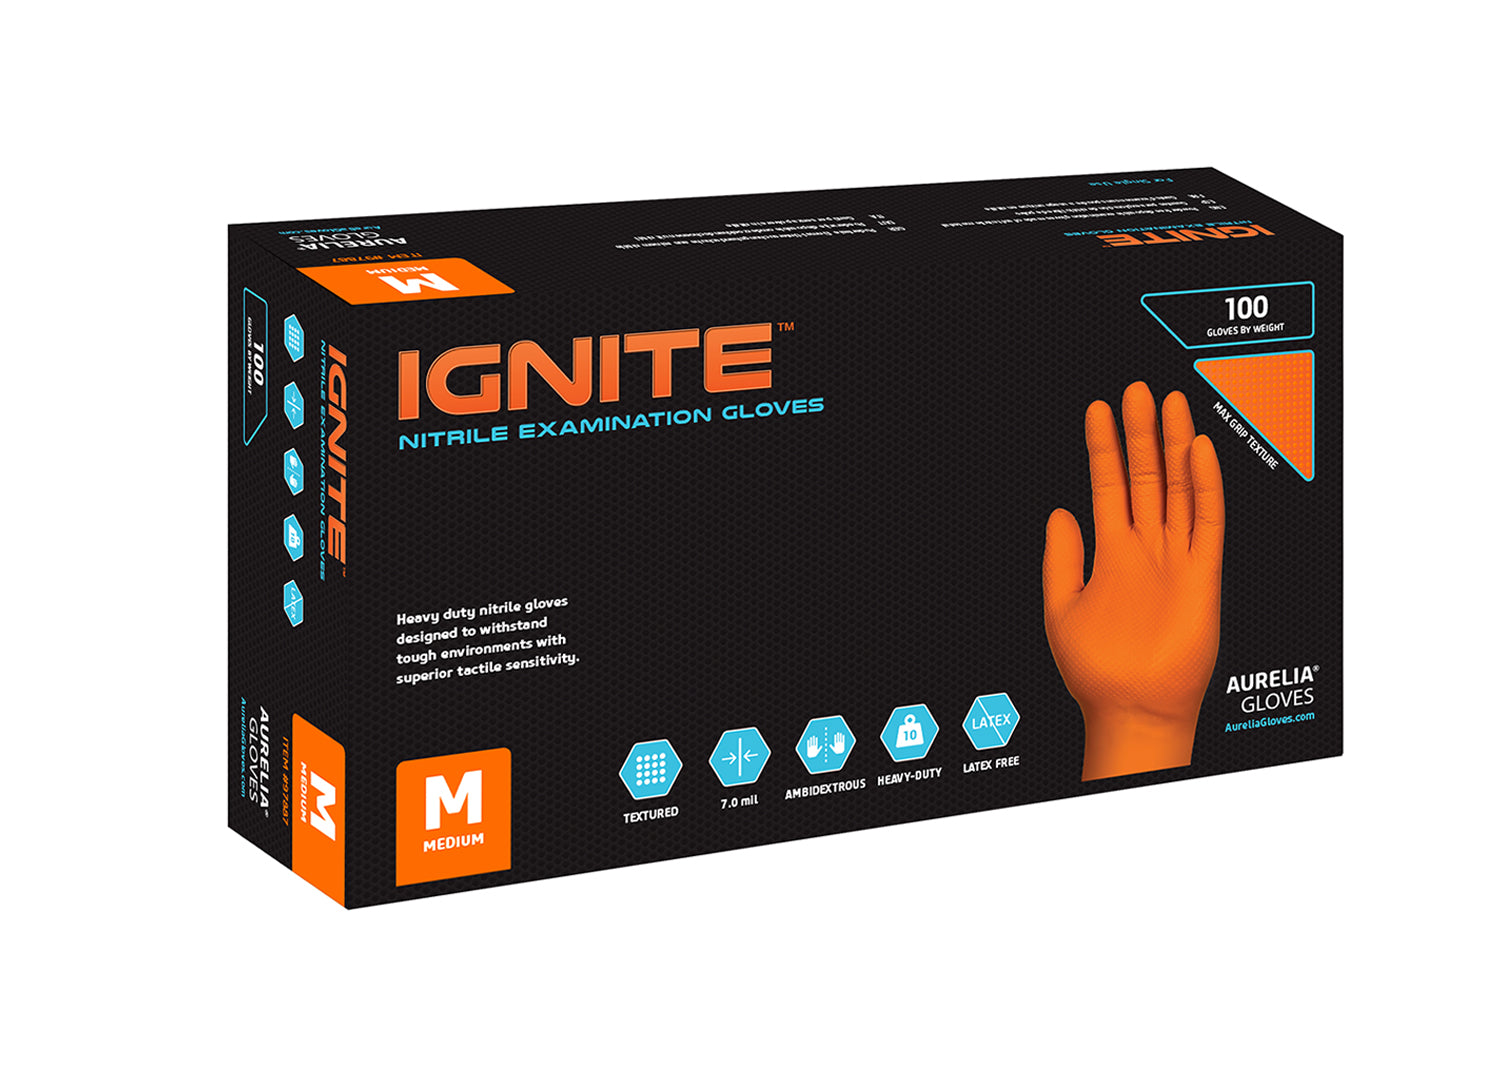 Aurelia Nitrile Exam Grade Latex Free Gloves - Ignite